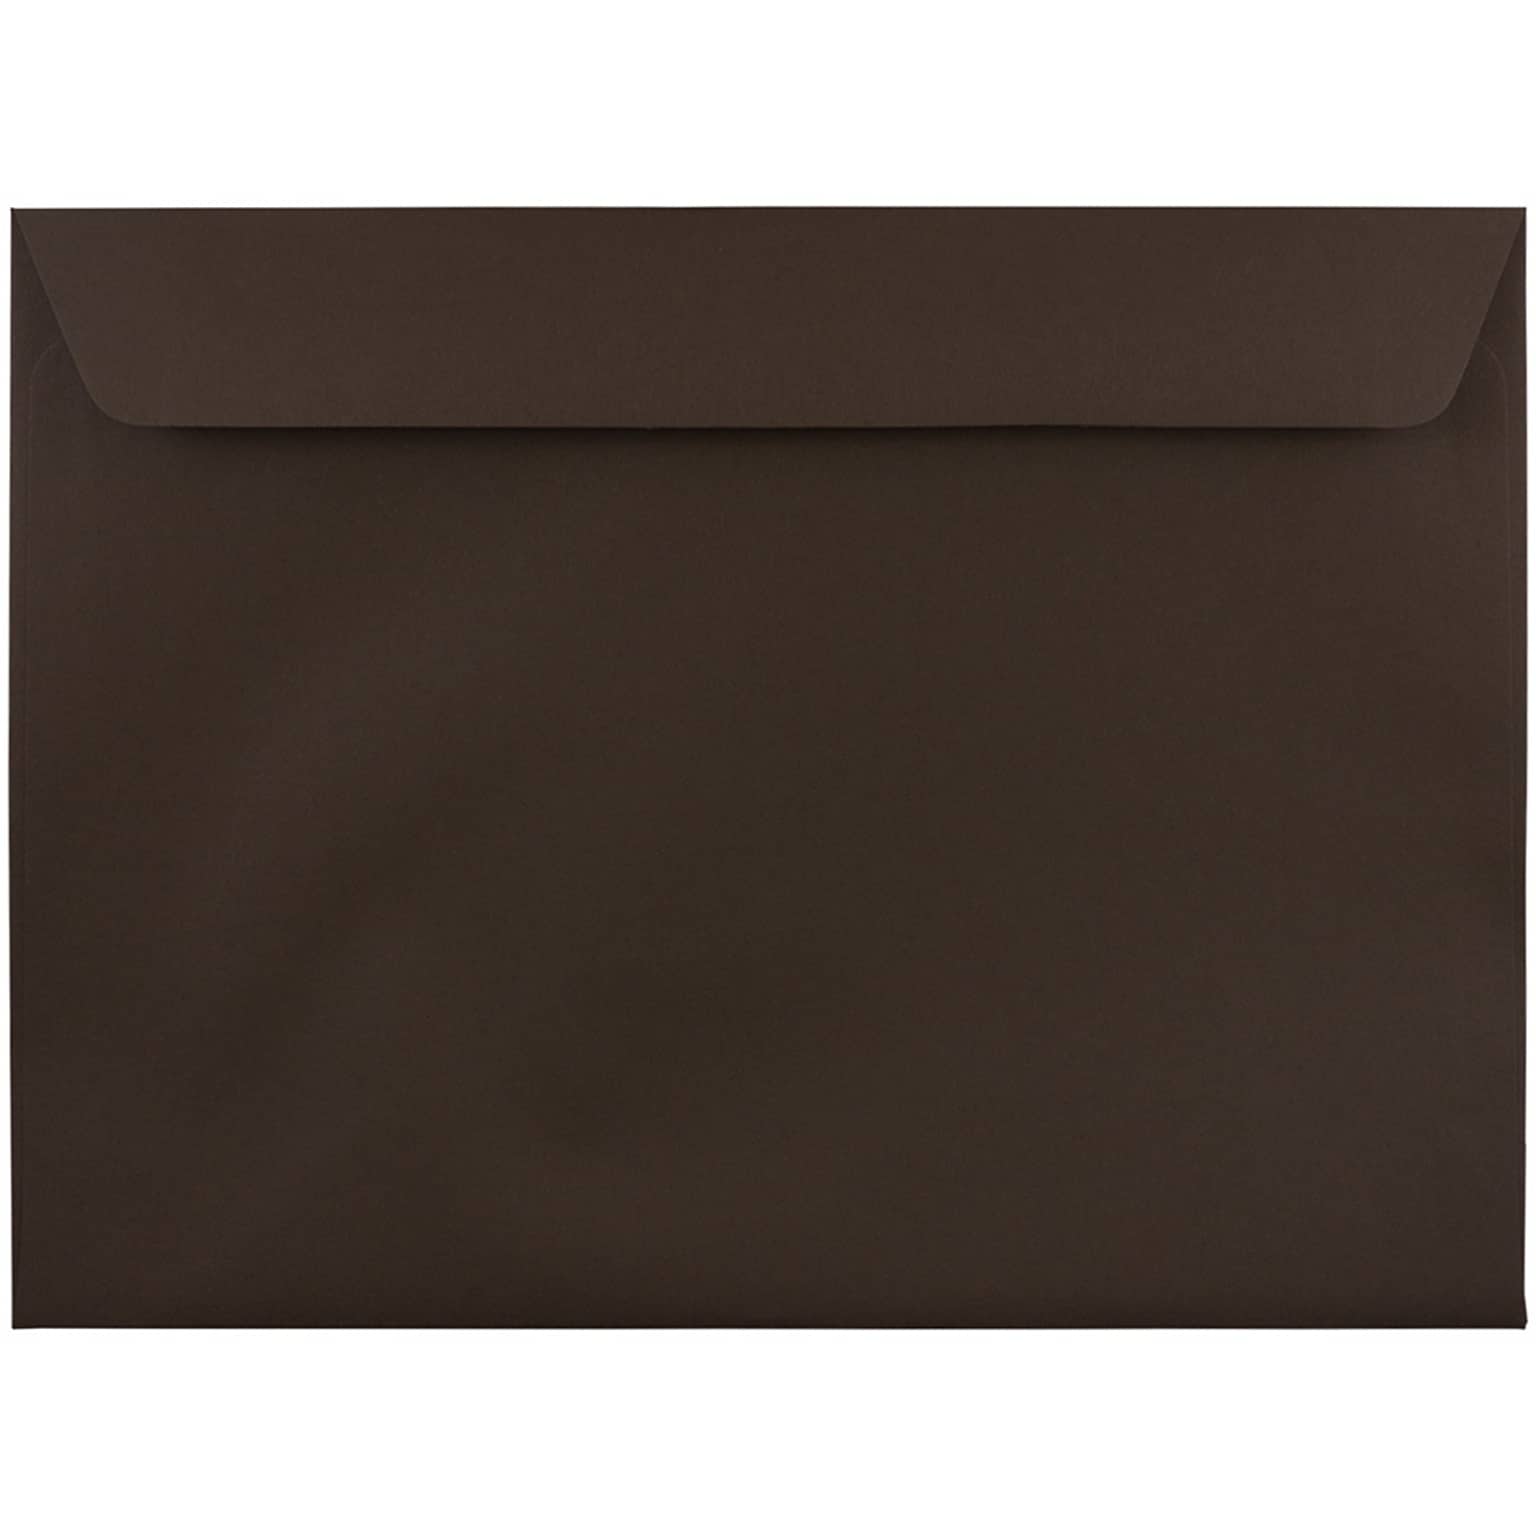 JAM Paper Booklet Envelope, 6 x 9, Chocolate Brown, 100/Pack (1287029f)